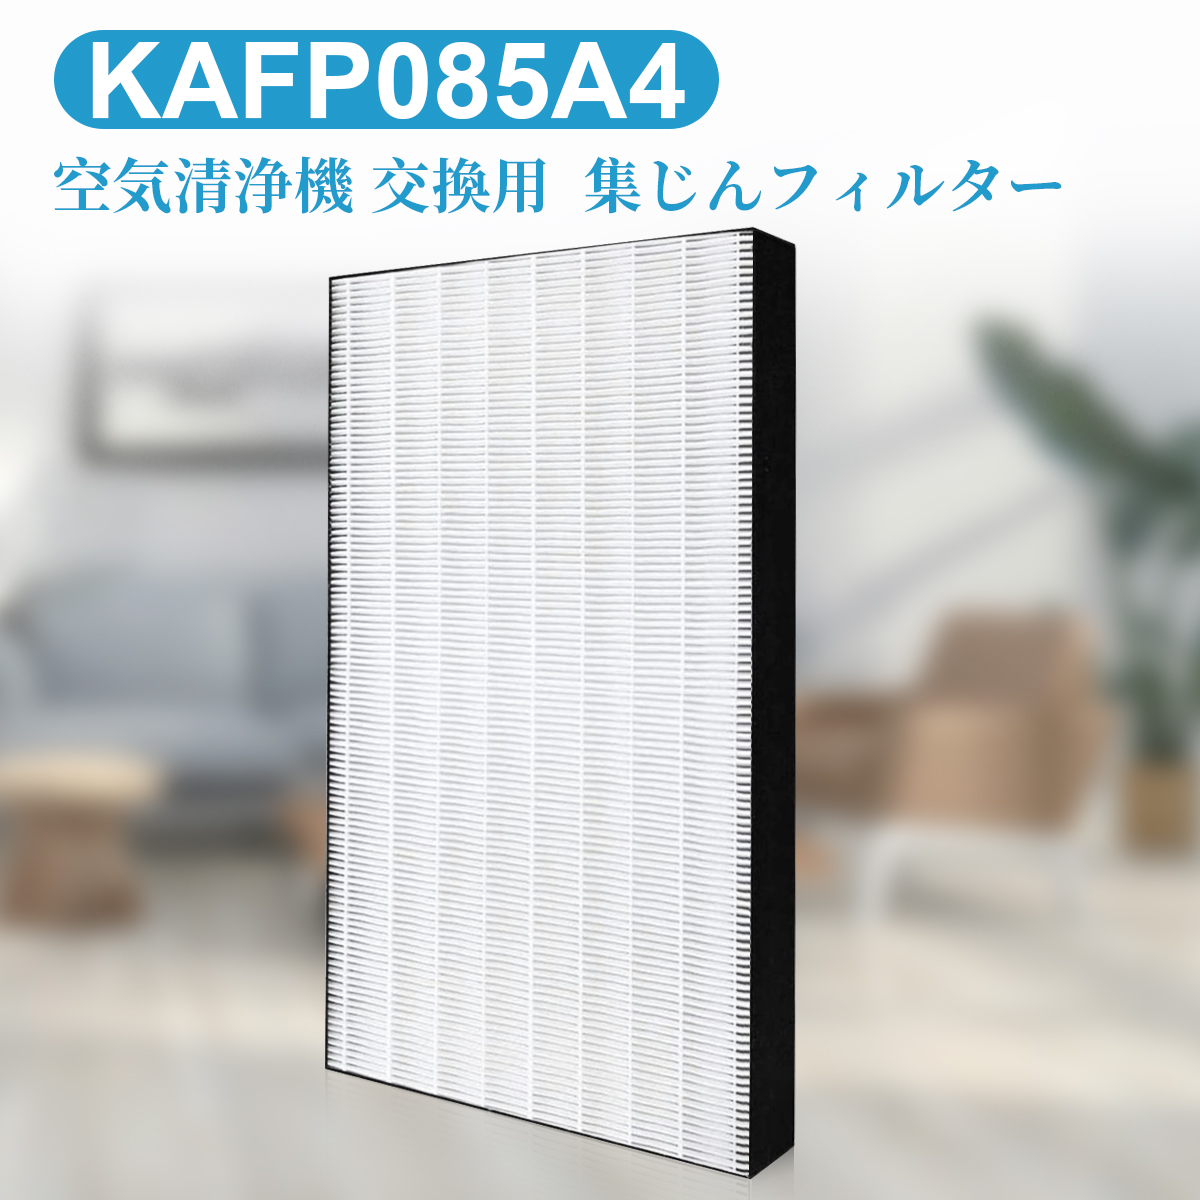 kafp085a4 集塵フィルター 推奨 ダイキン空気清浄機交換用 フィルター 激安通販販売 ダイキン 加湿空気清浄機用 互換品 1枚入り KAFP085A4 交換用集じんHEPAフィルター